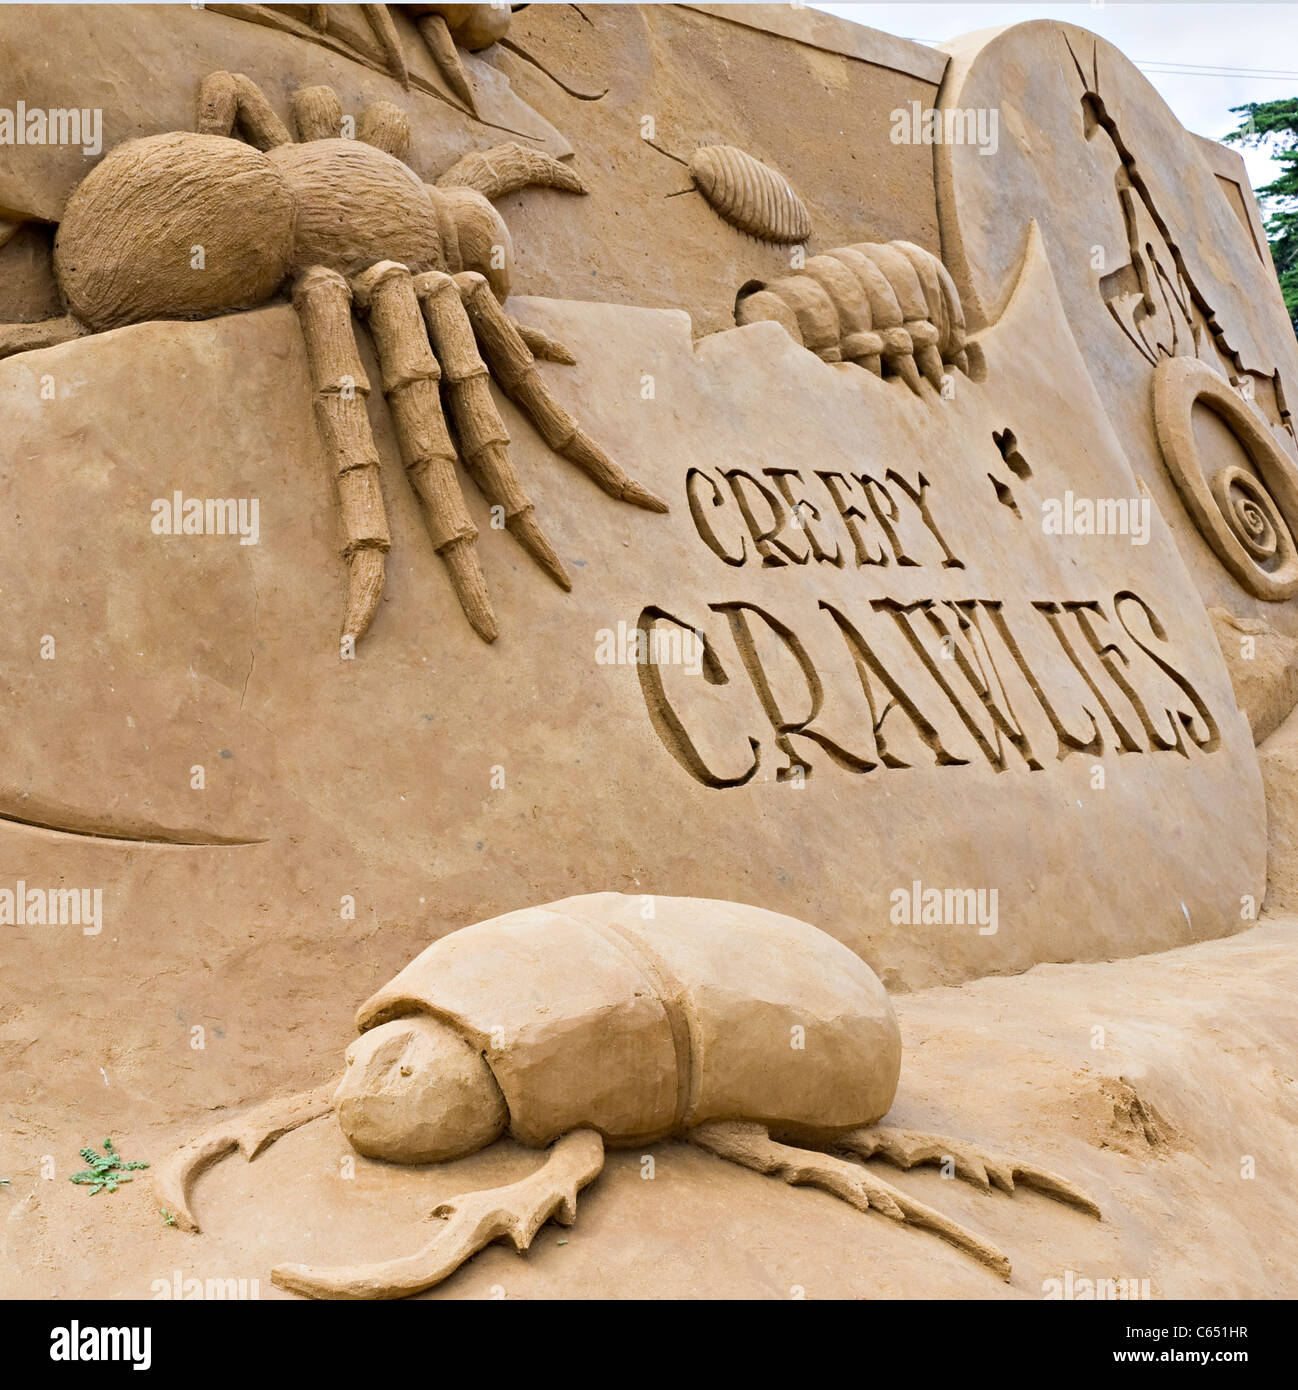 Spider Sand Sculpture Tourist Art Attraction Creepy Crawiles at Frankston near Melbourne Victoria Australia Stock Photo